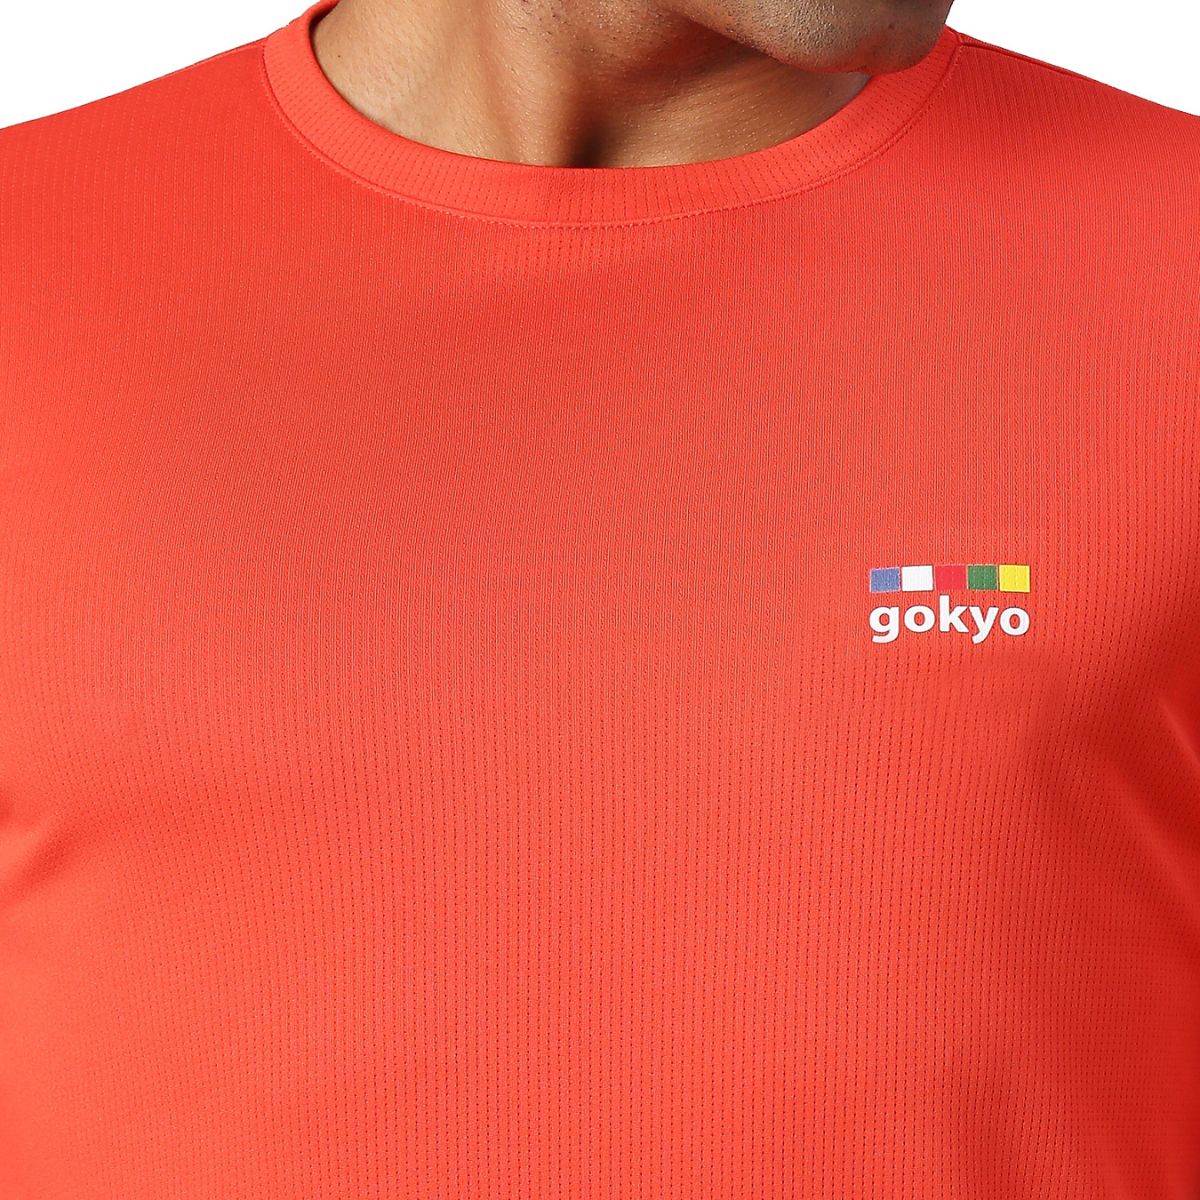 Gokyo Dry Fit Super Light Full Sleeves Trekking and Hiking T-Shirt  13